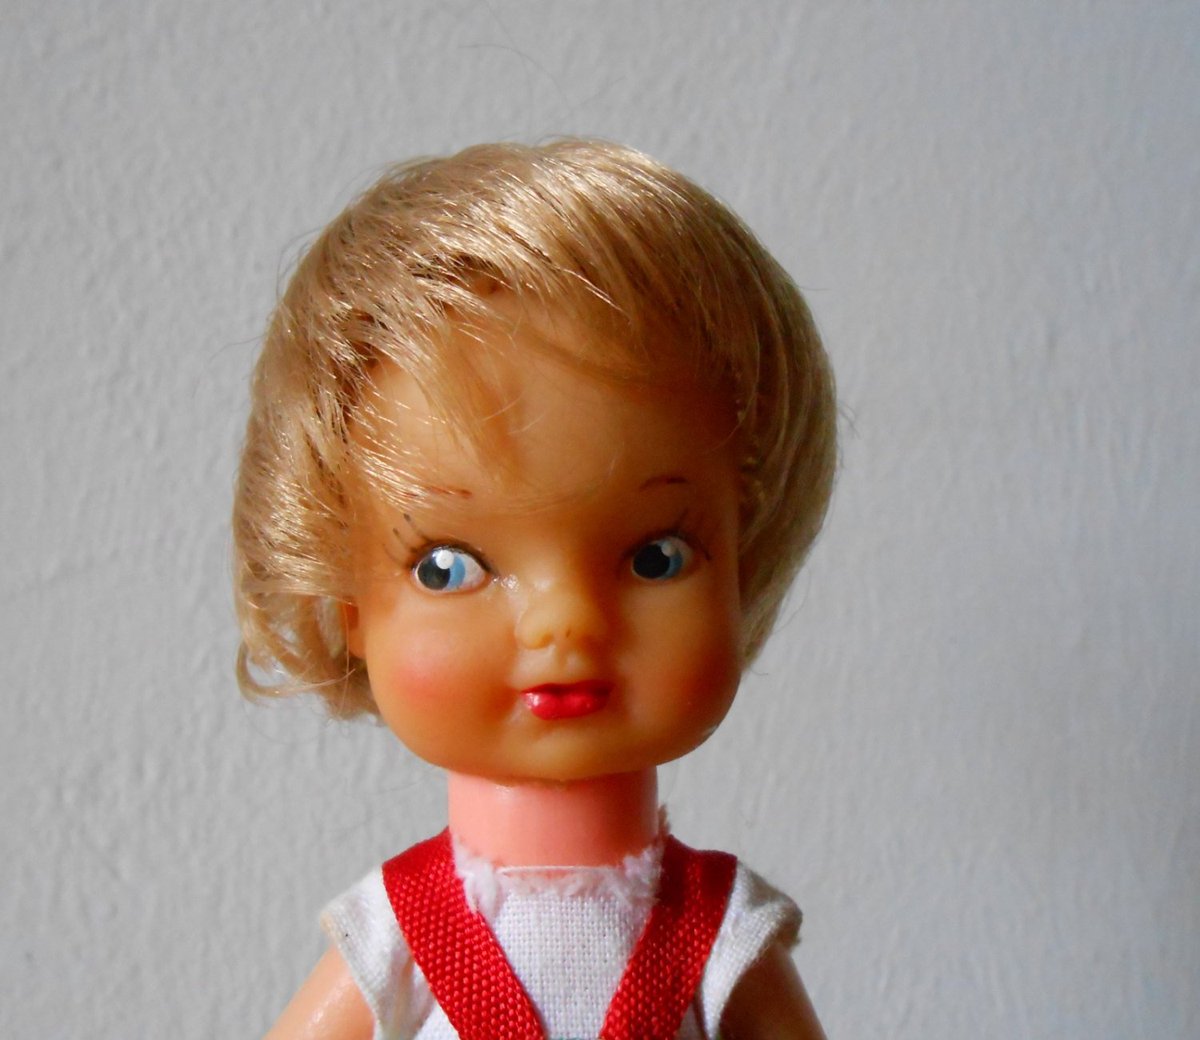 Ari doll 4 1/2 inch little doll original cloth 11 cm dollhouse doll rubber plastic doll ARI Germany doll collectible mini doll doll clothes etsy.me/2HoBNNX #giocattoli #arcobaleno #rosso #vintagedoll #aridoll #littlebabydoll #collectibledoll #dollhousedoll #doll